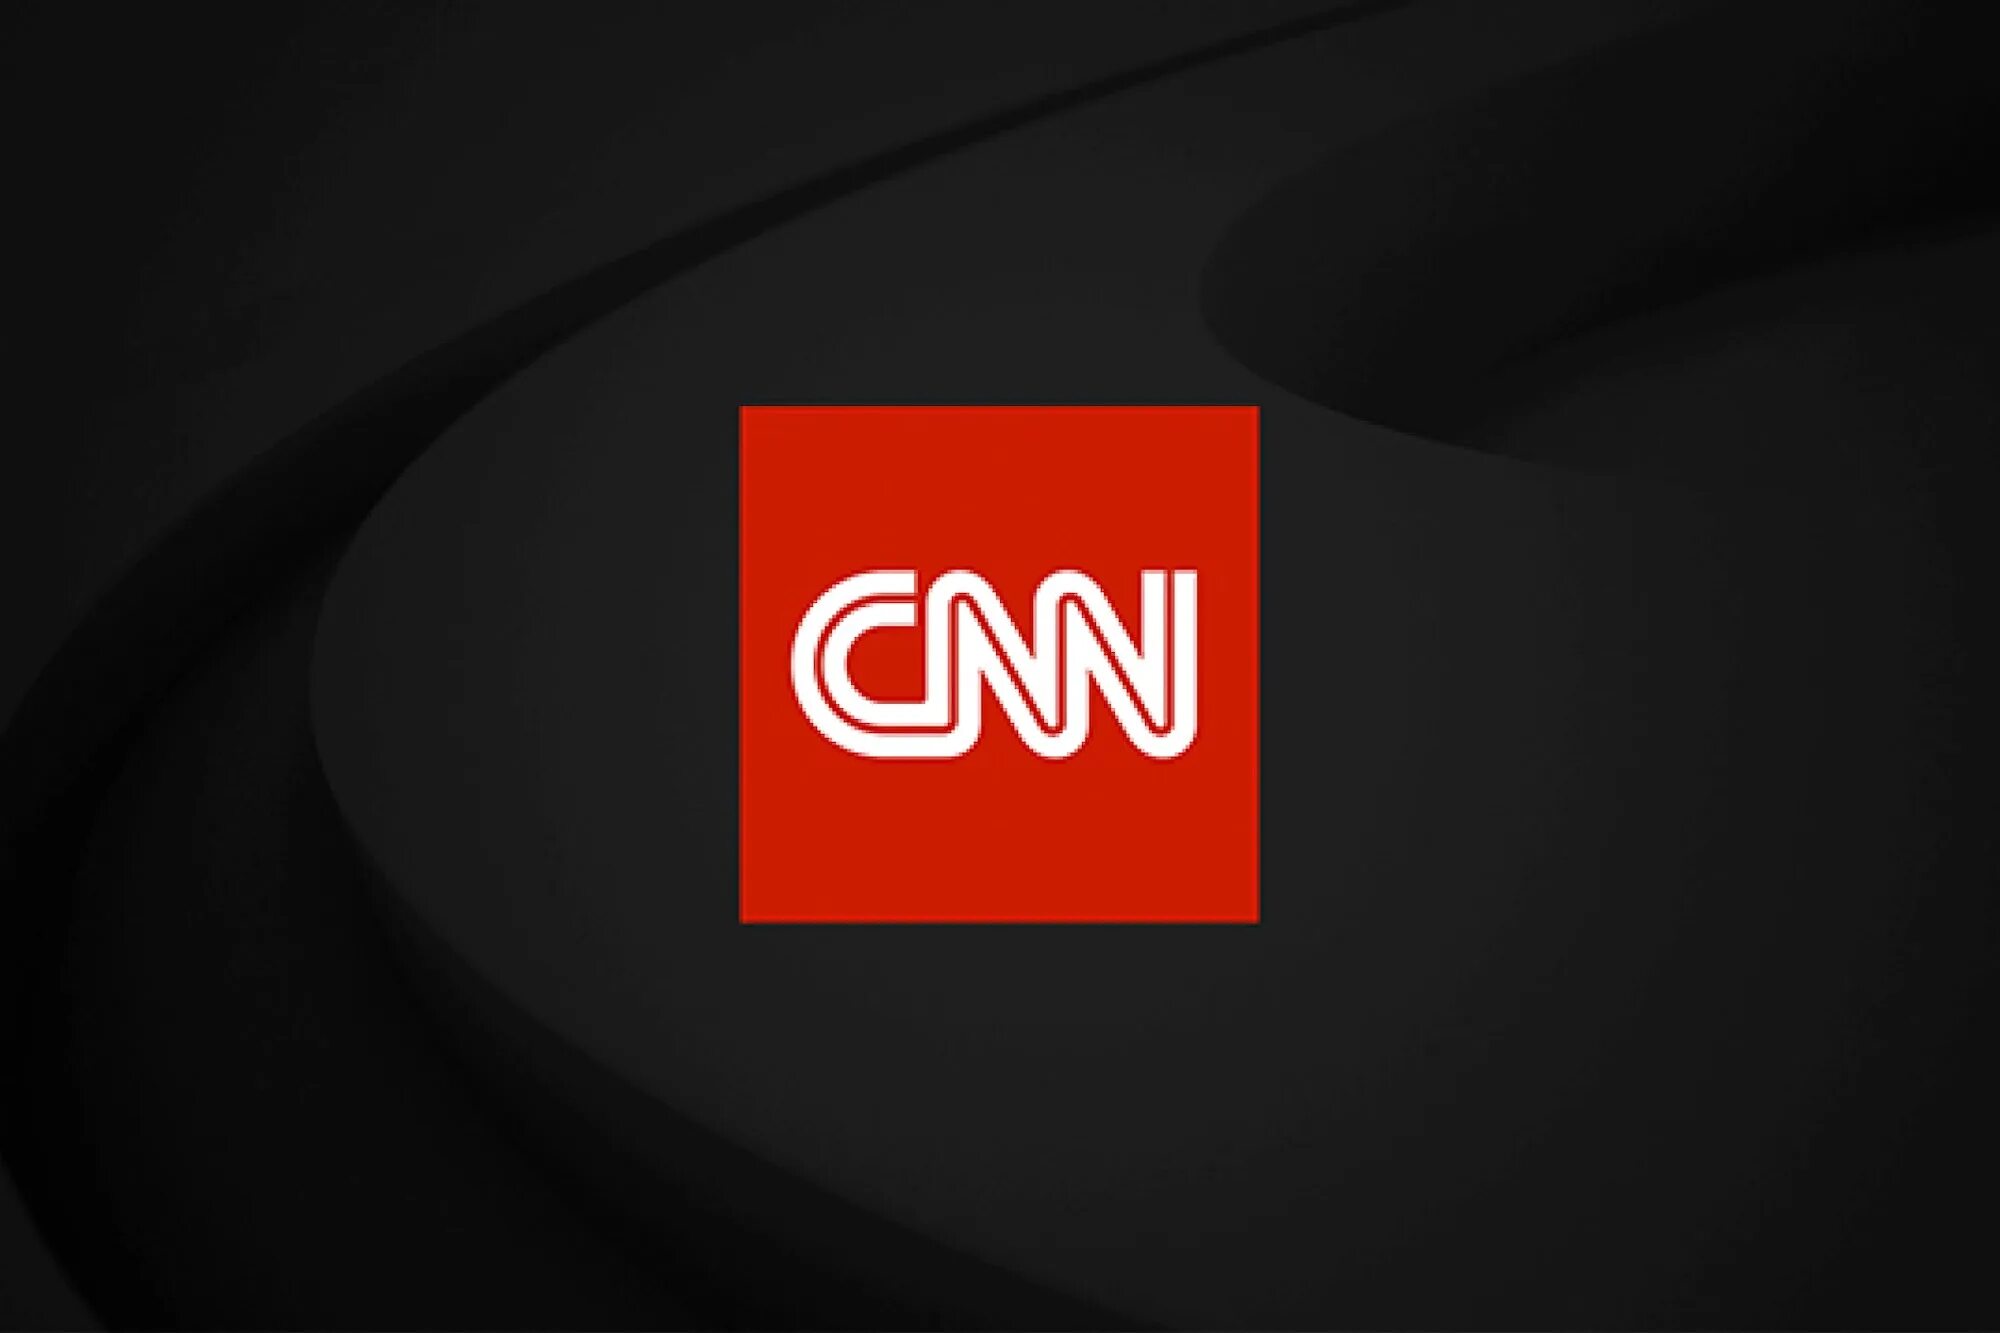 Cnn live. CNN. Канал CNN. Логотип СНН. CNN картинки.